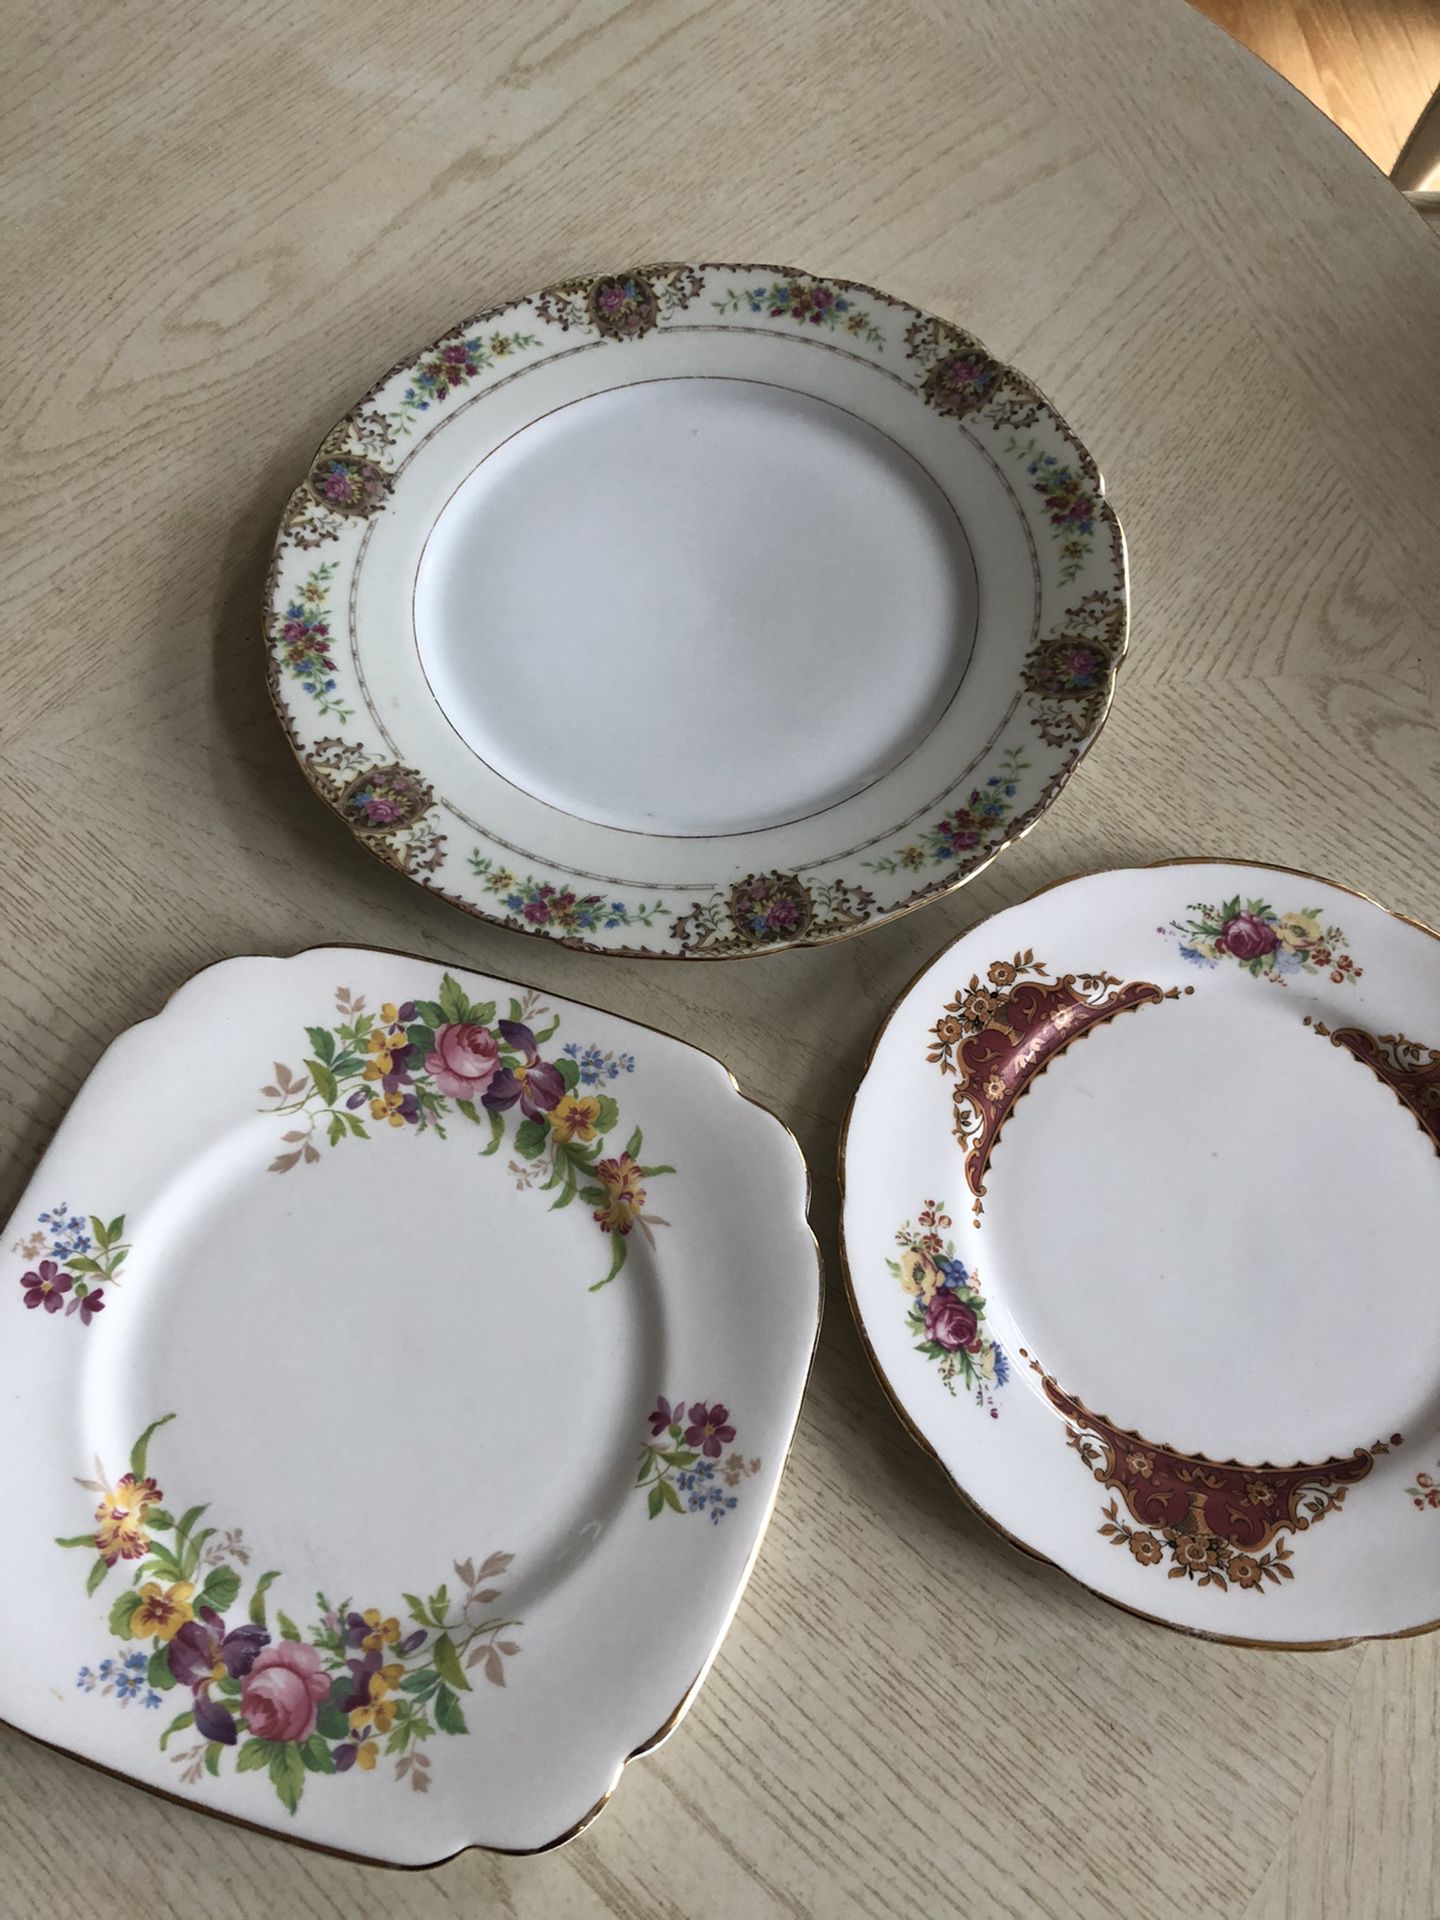 Vintage China Plates (3)